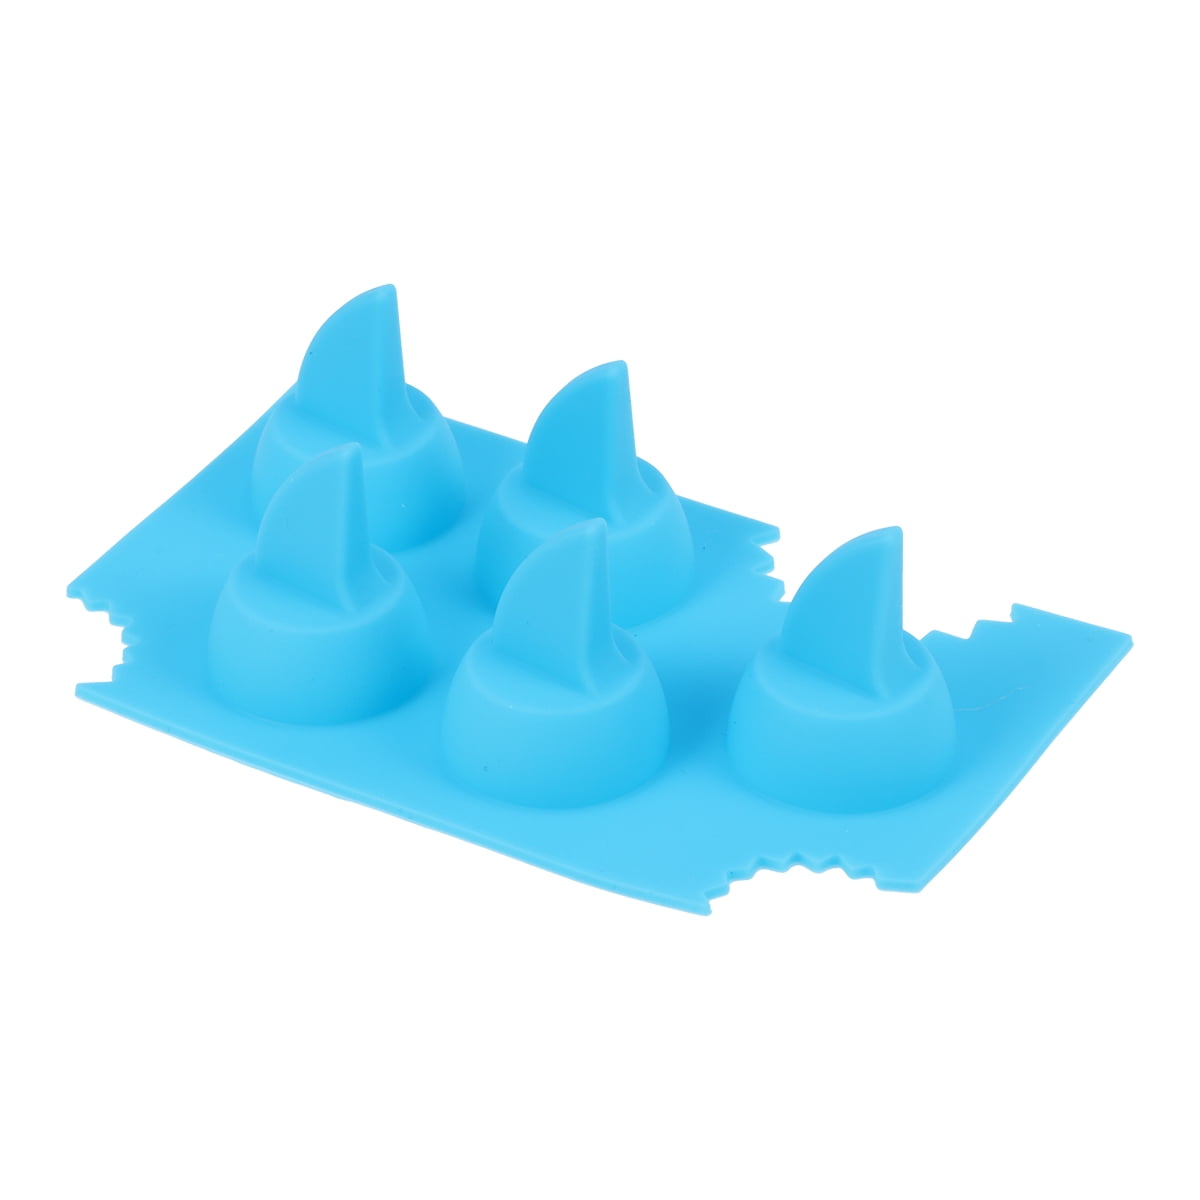 Shark Fin Ice Cube Tray, Modern shape Add more fun in your …